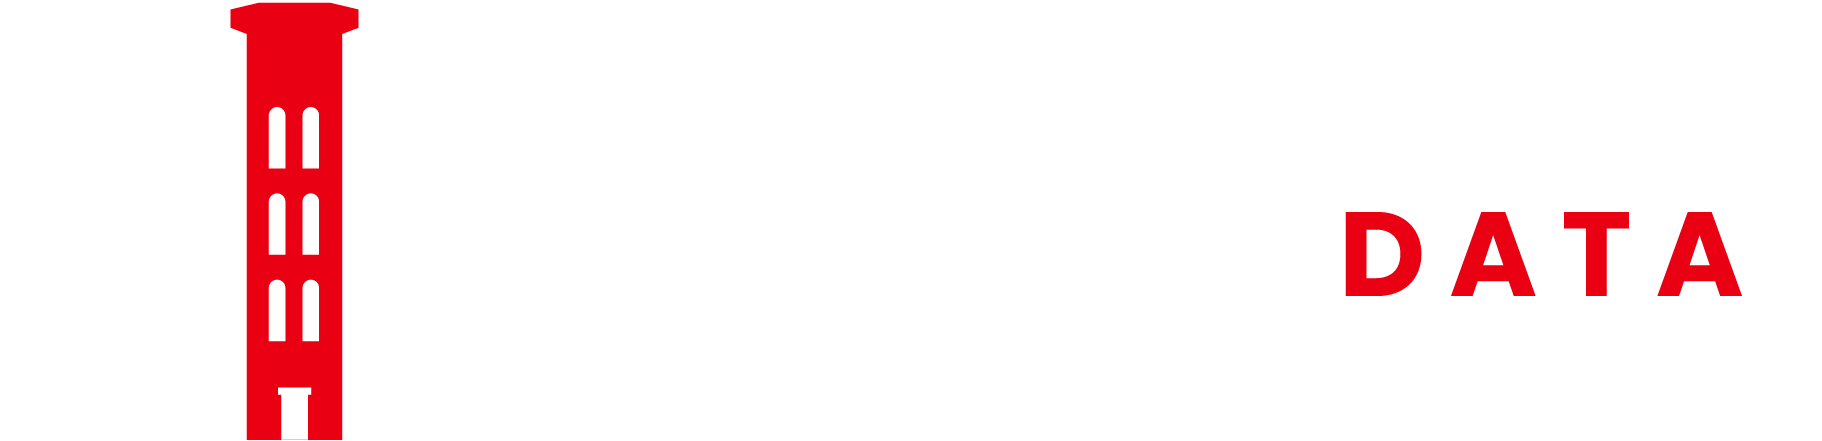 Belmont Data Collaborative